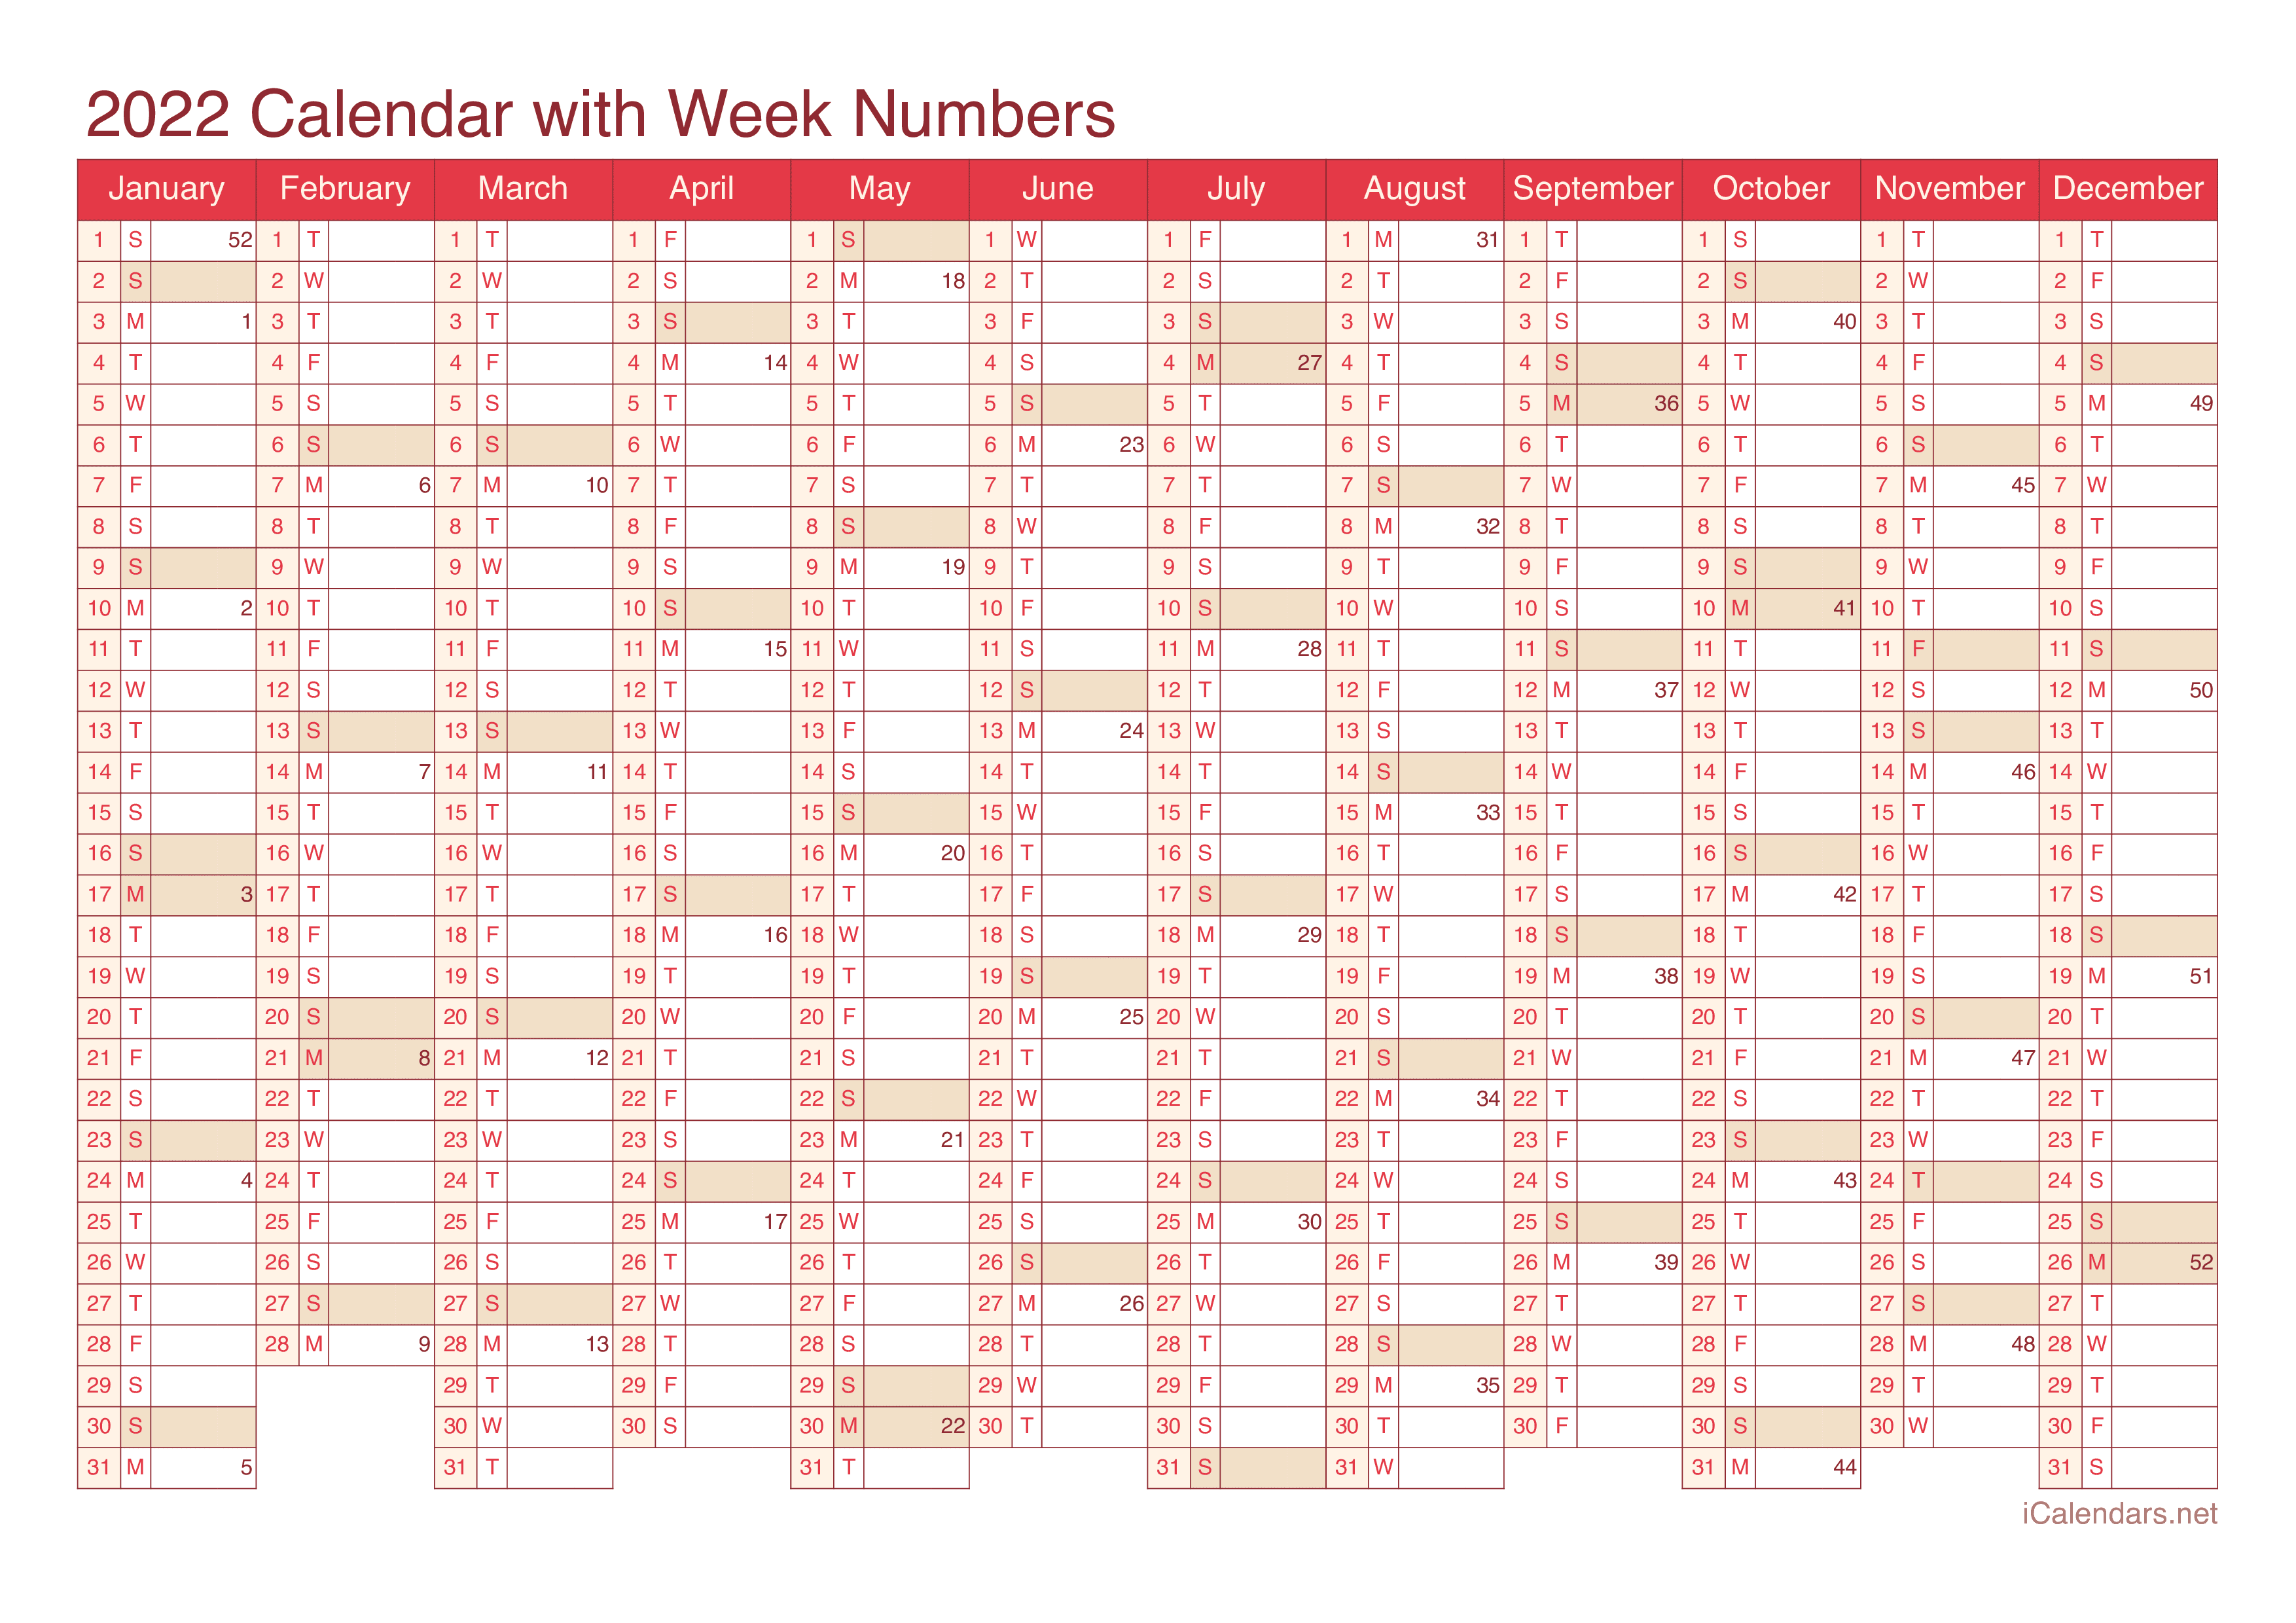 2022 Calendar with week numbers - Cherry